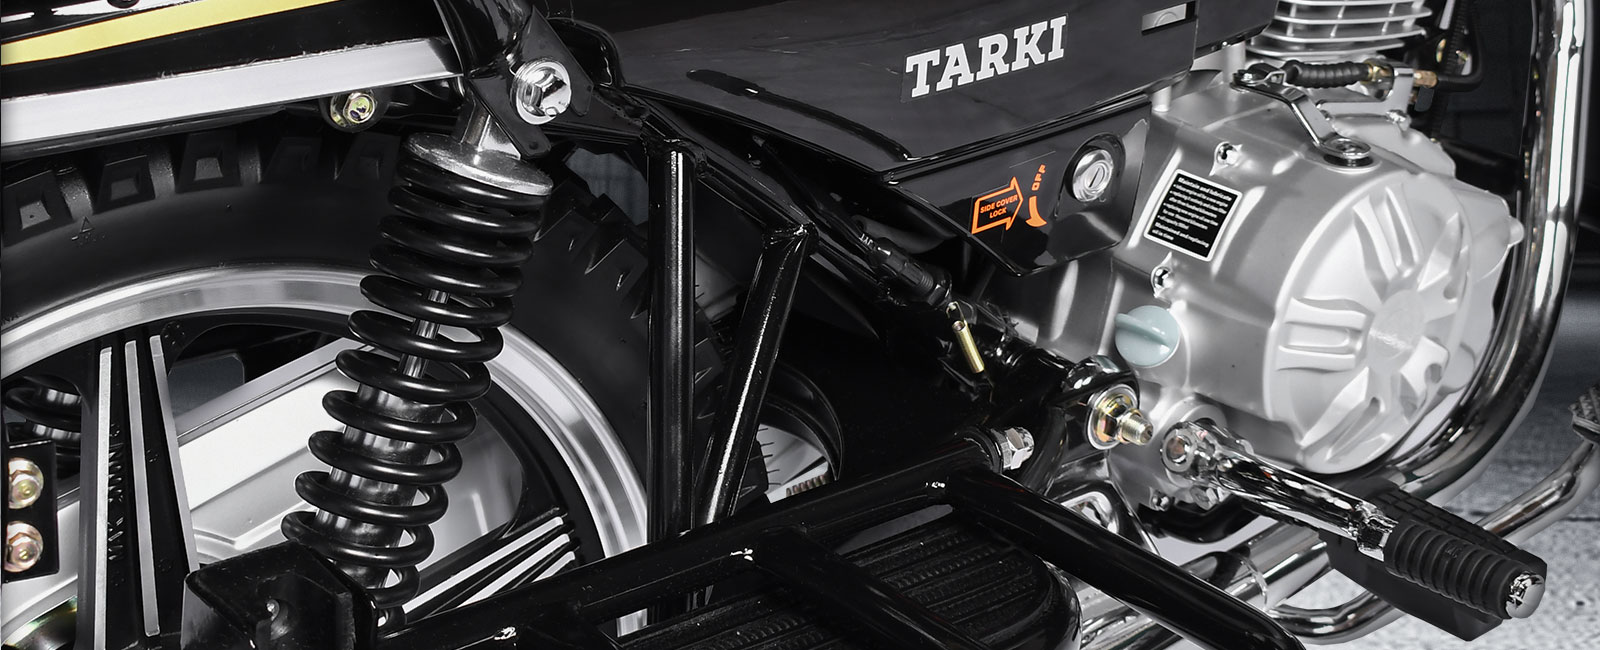 Parrilla lateral de la Moto utilitaria TARKI 150